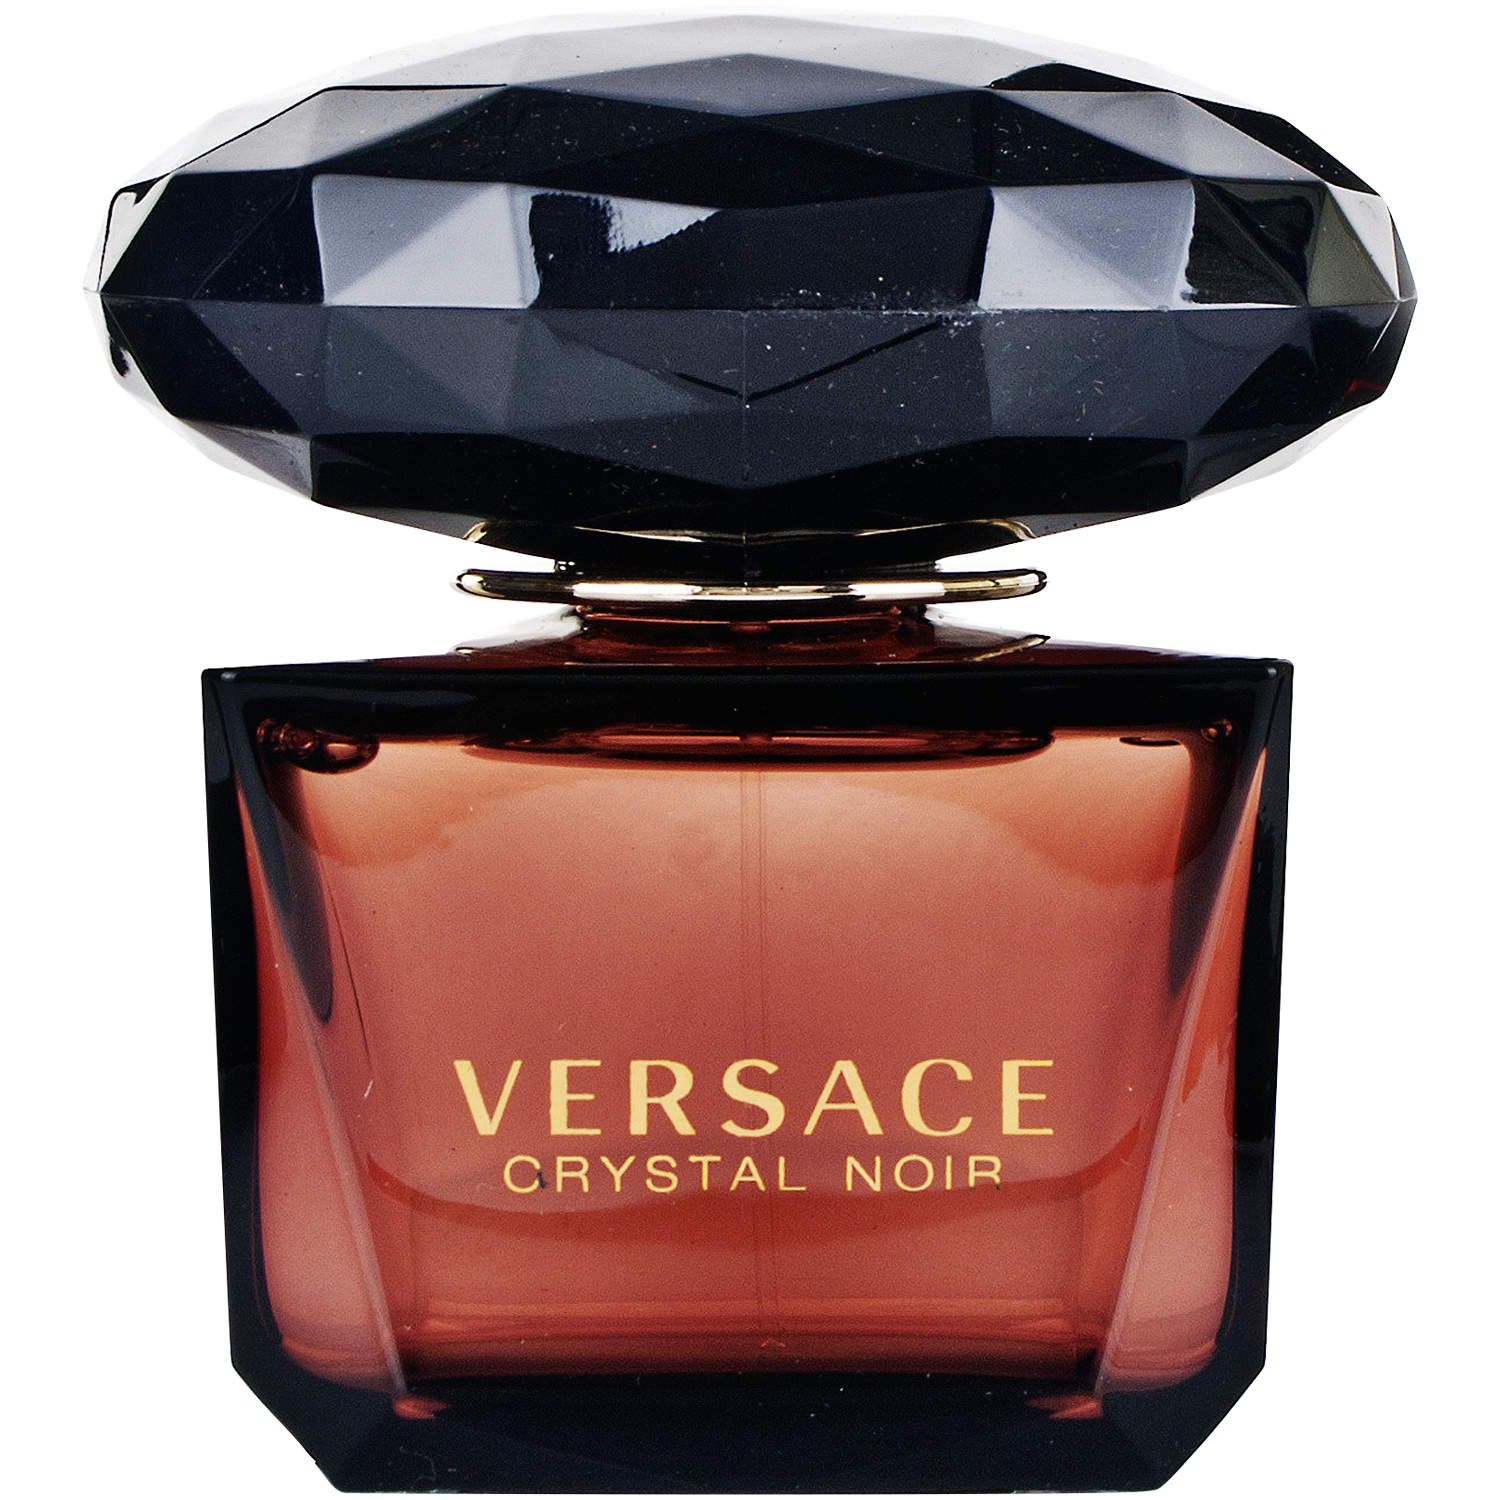 Versace woda toaletowa damska 90ml Crystal Noir | hebe.pl